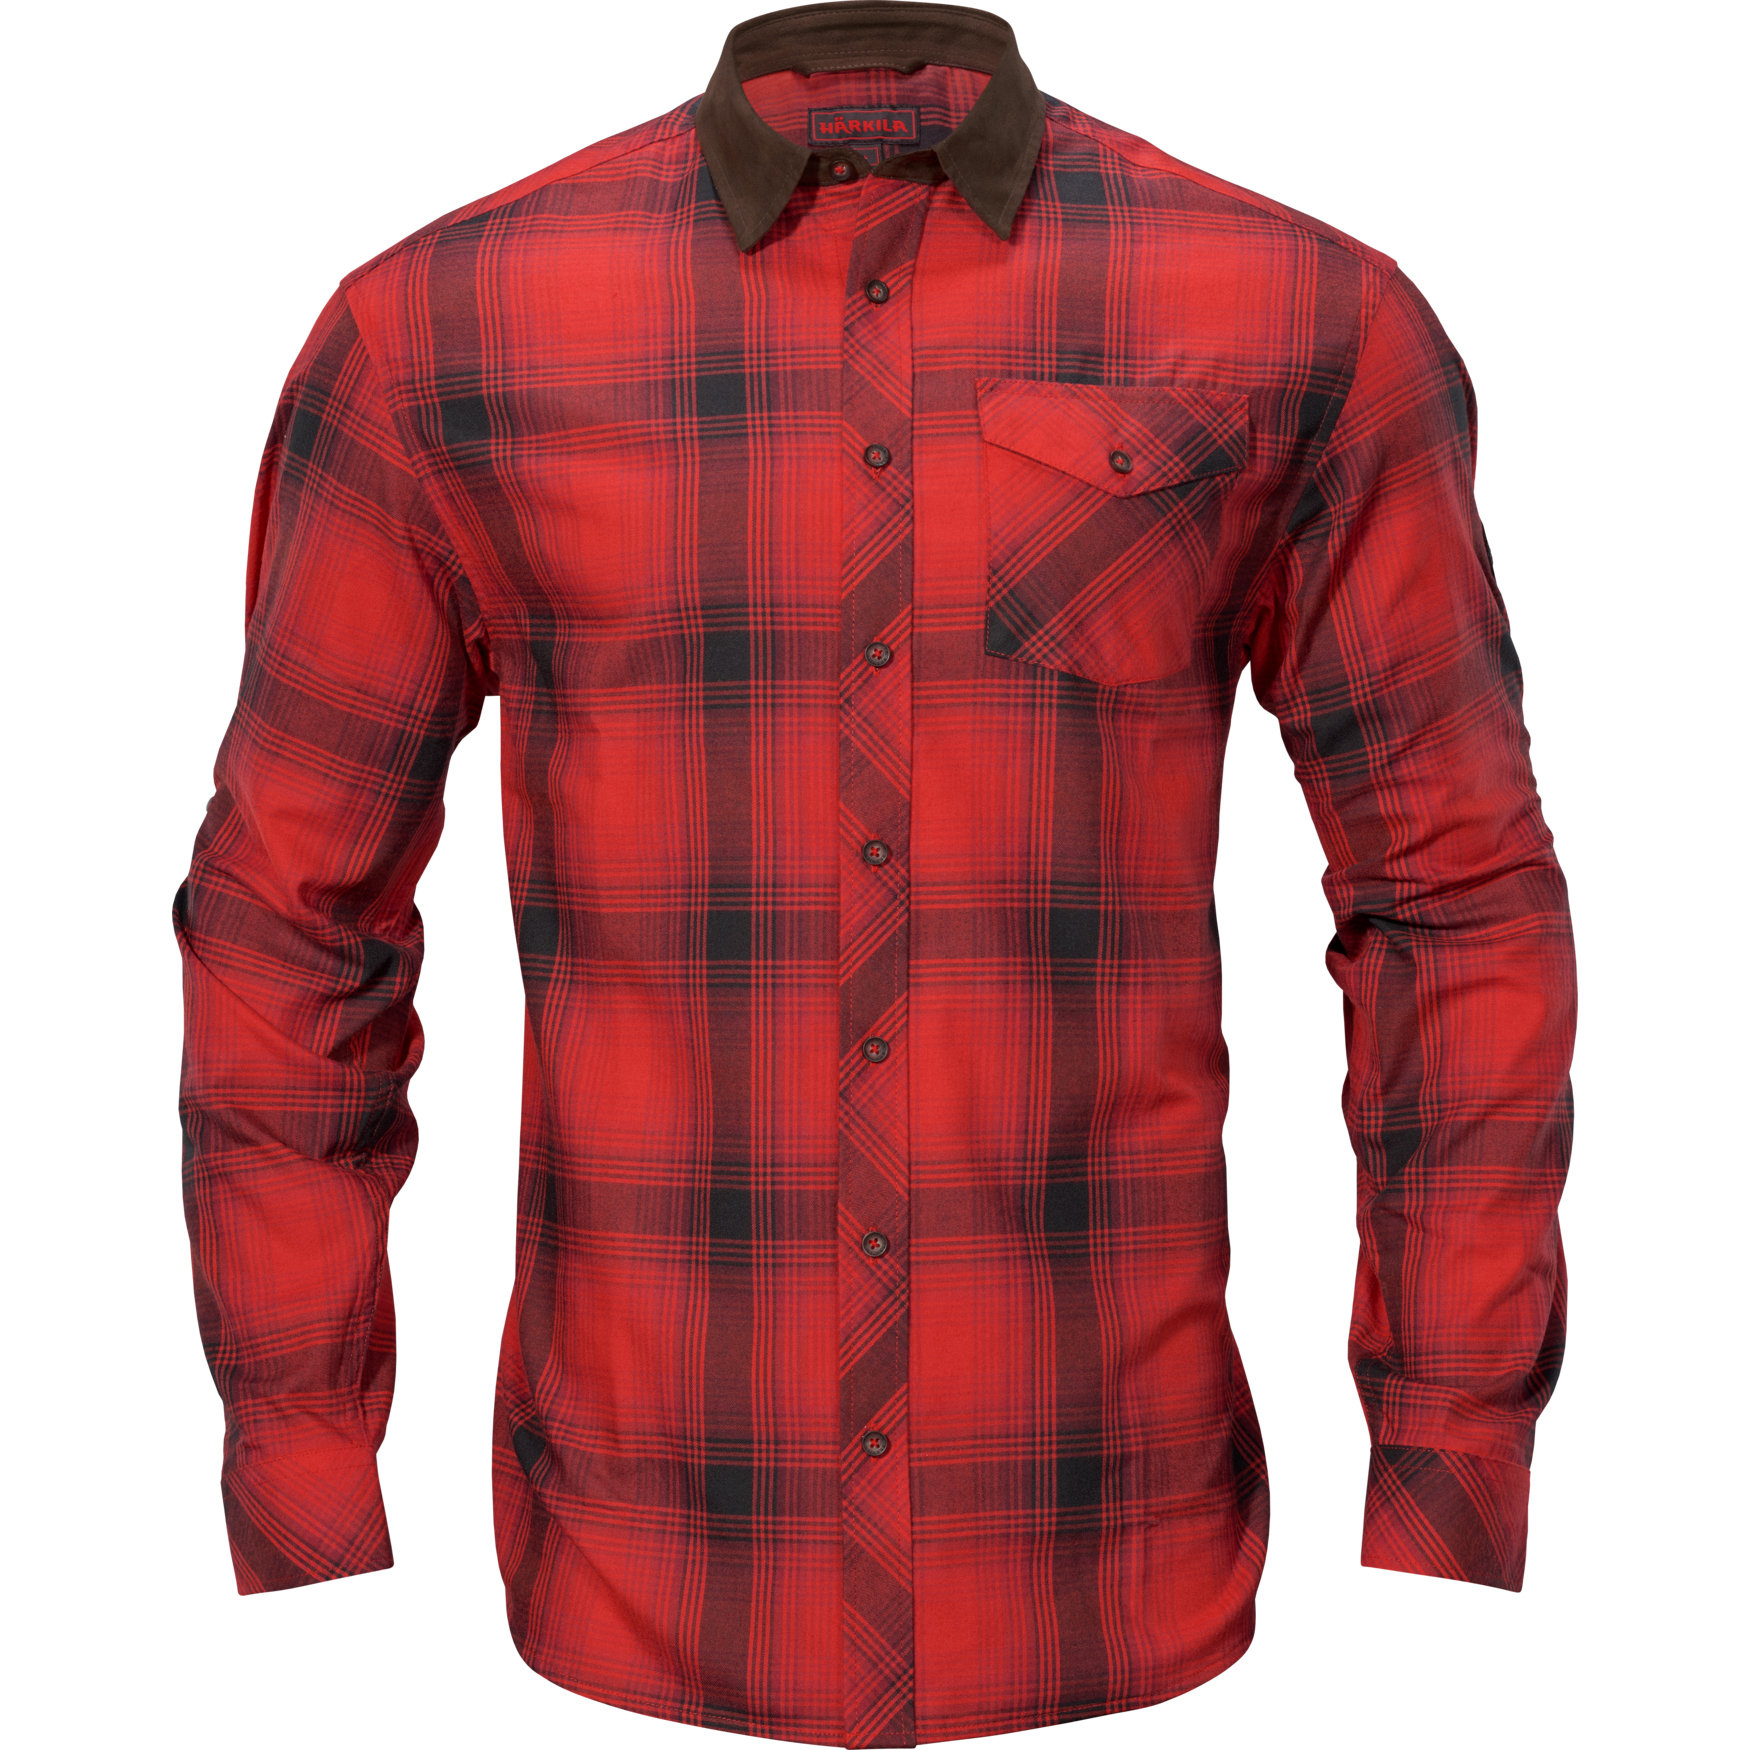 Men’s Driven Hunt Flannel Shirt Red/Black check